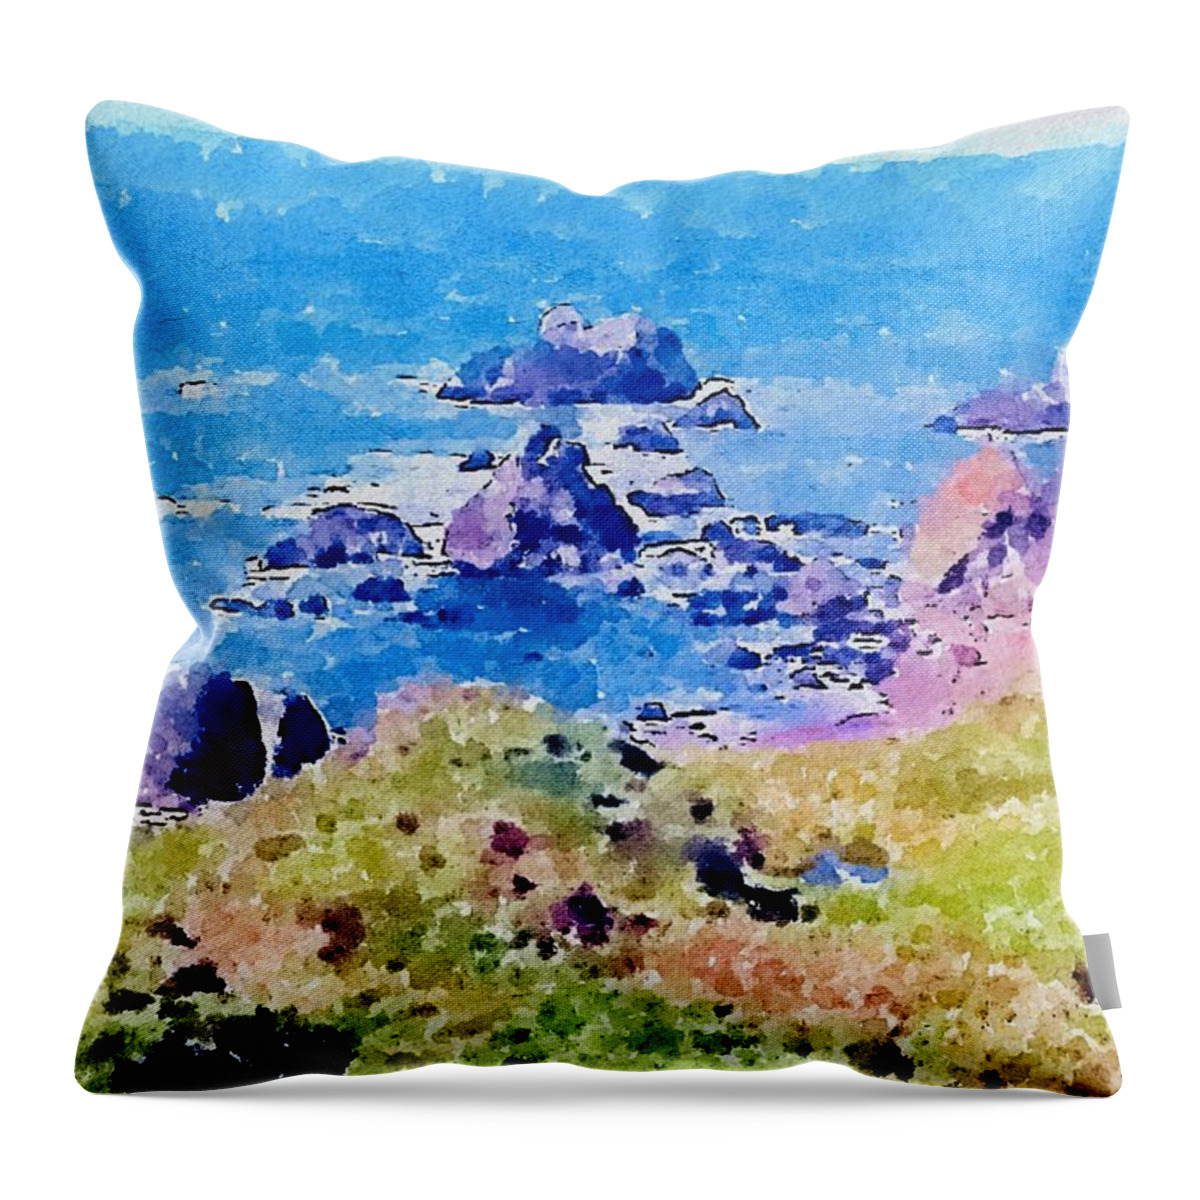 #ocean Throw Pillow featuring the photograph Ocean view by Steven Wills